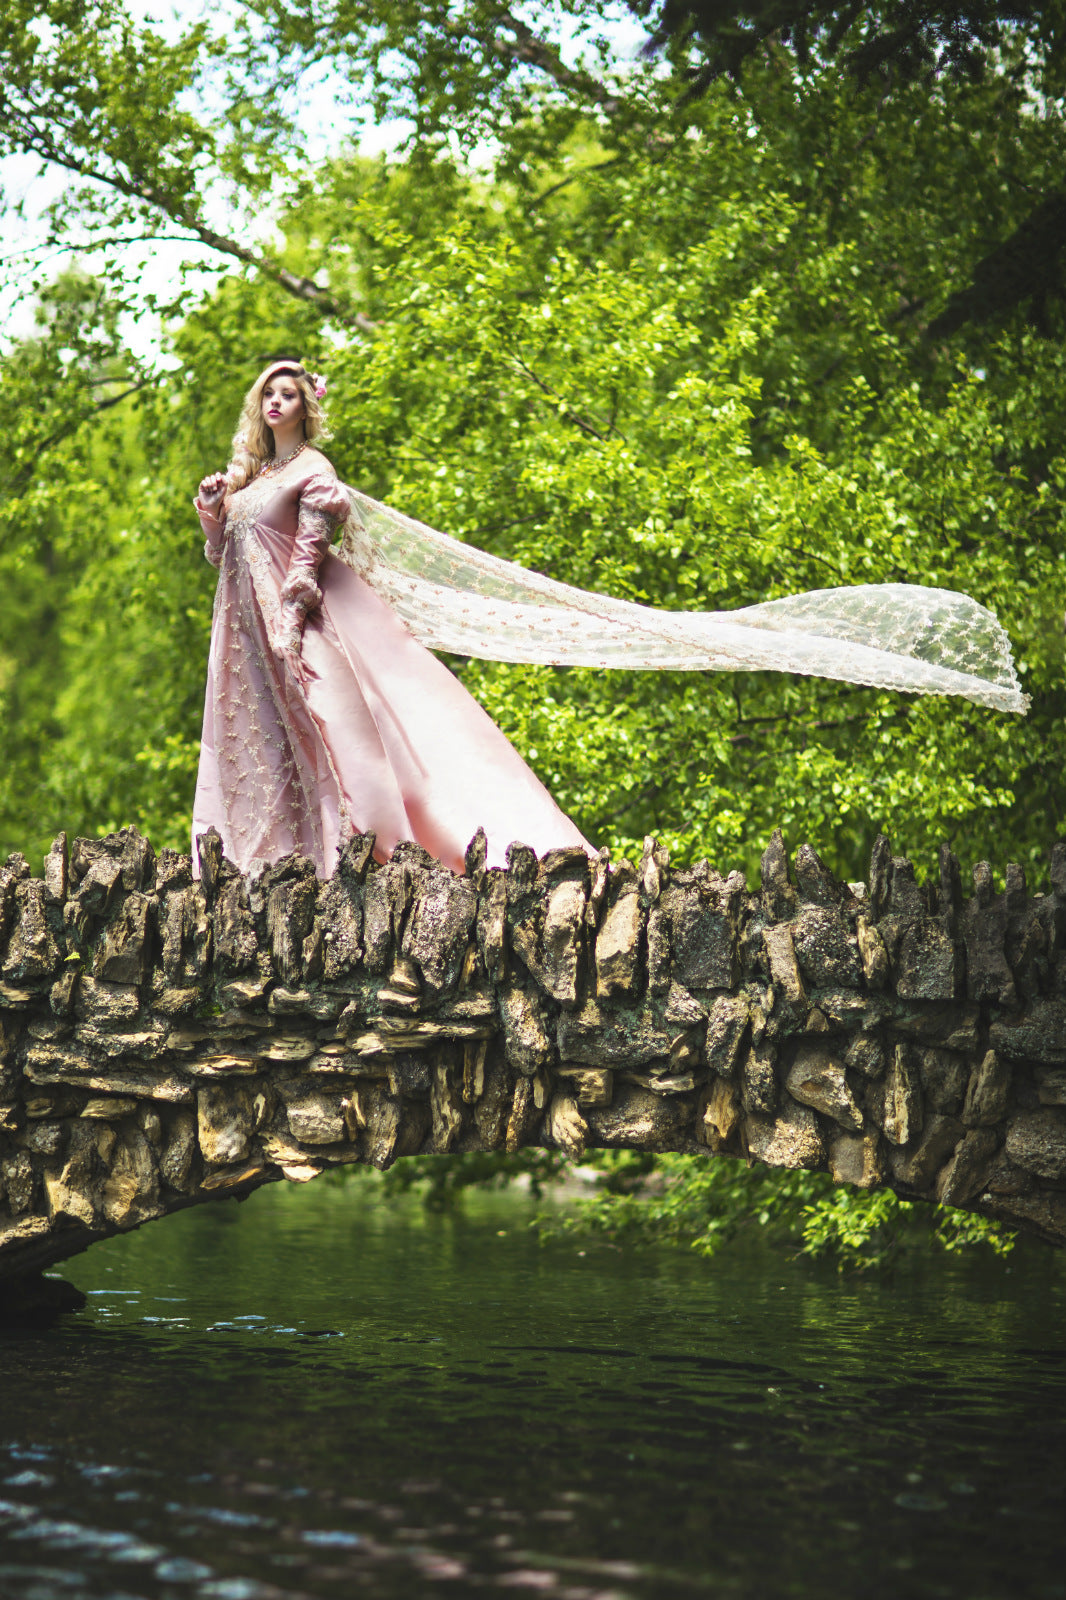 Modest Wedding Dresses | Fantasy Bridal